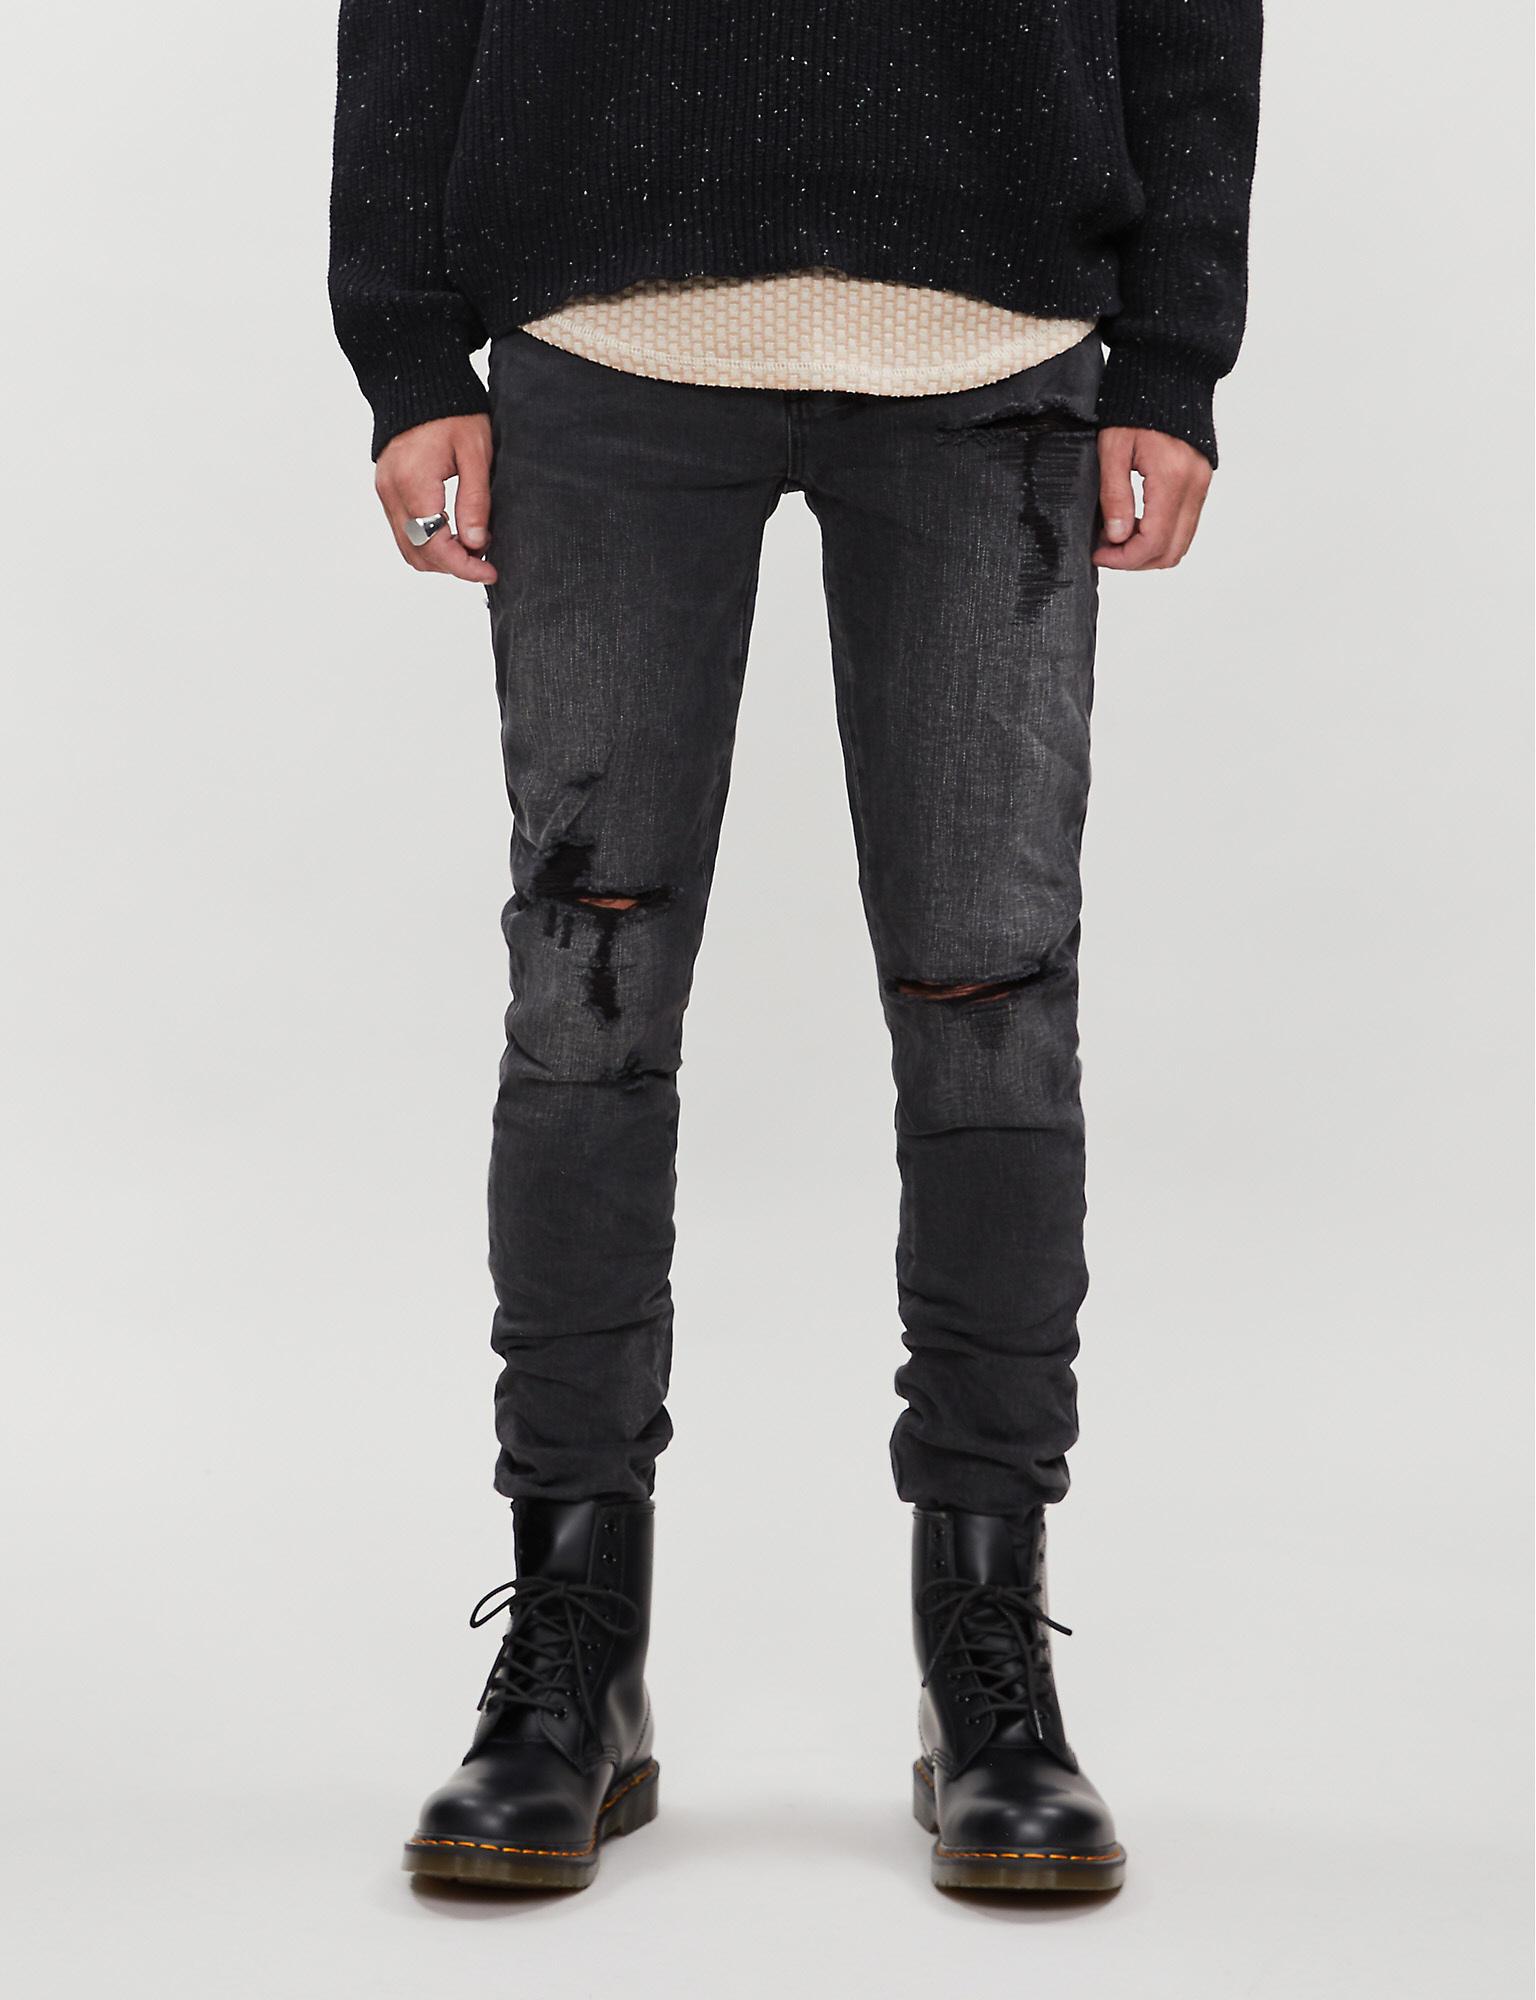 Ksubi Van Winkle Ripped Cotton Jeans in Black for Men - Lyst